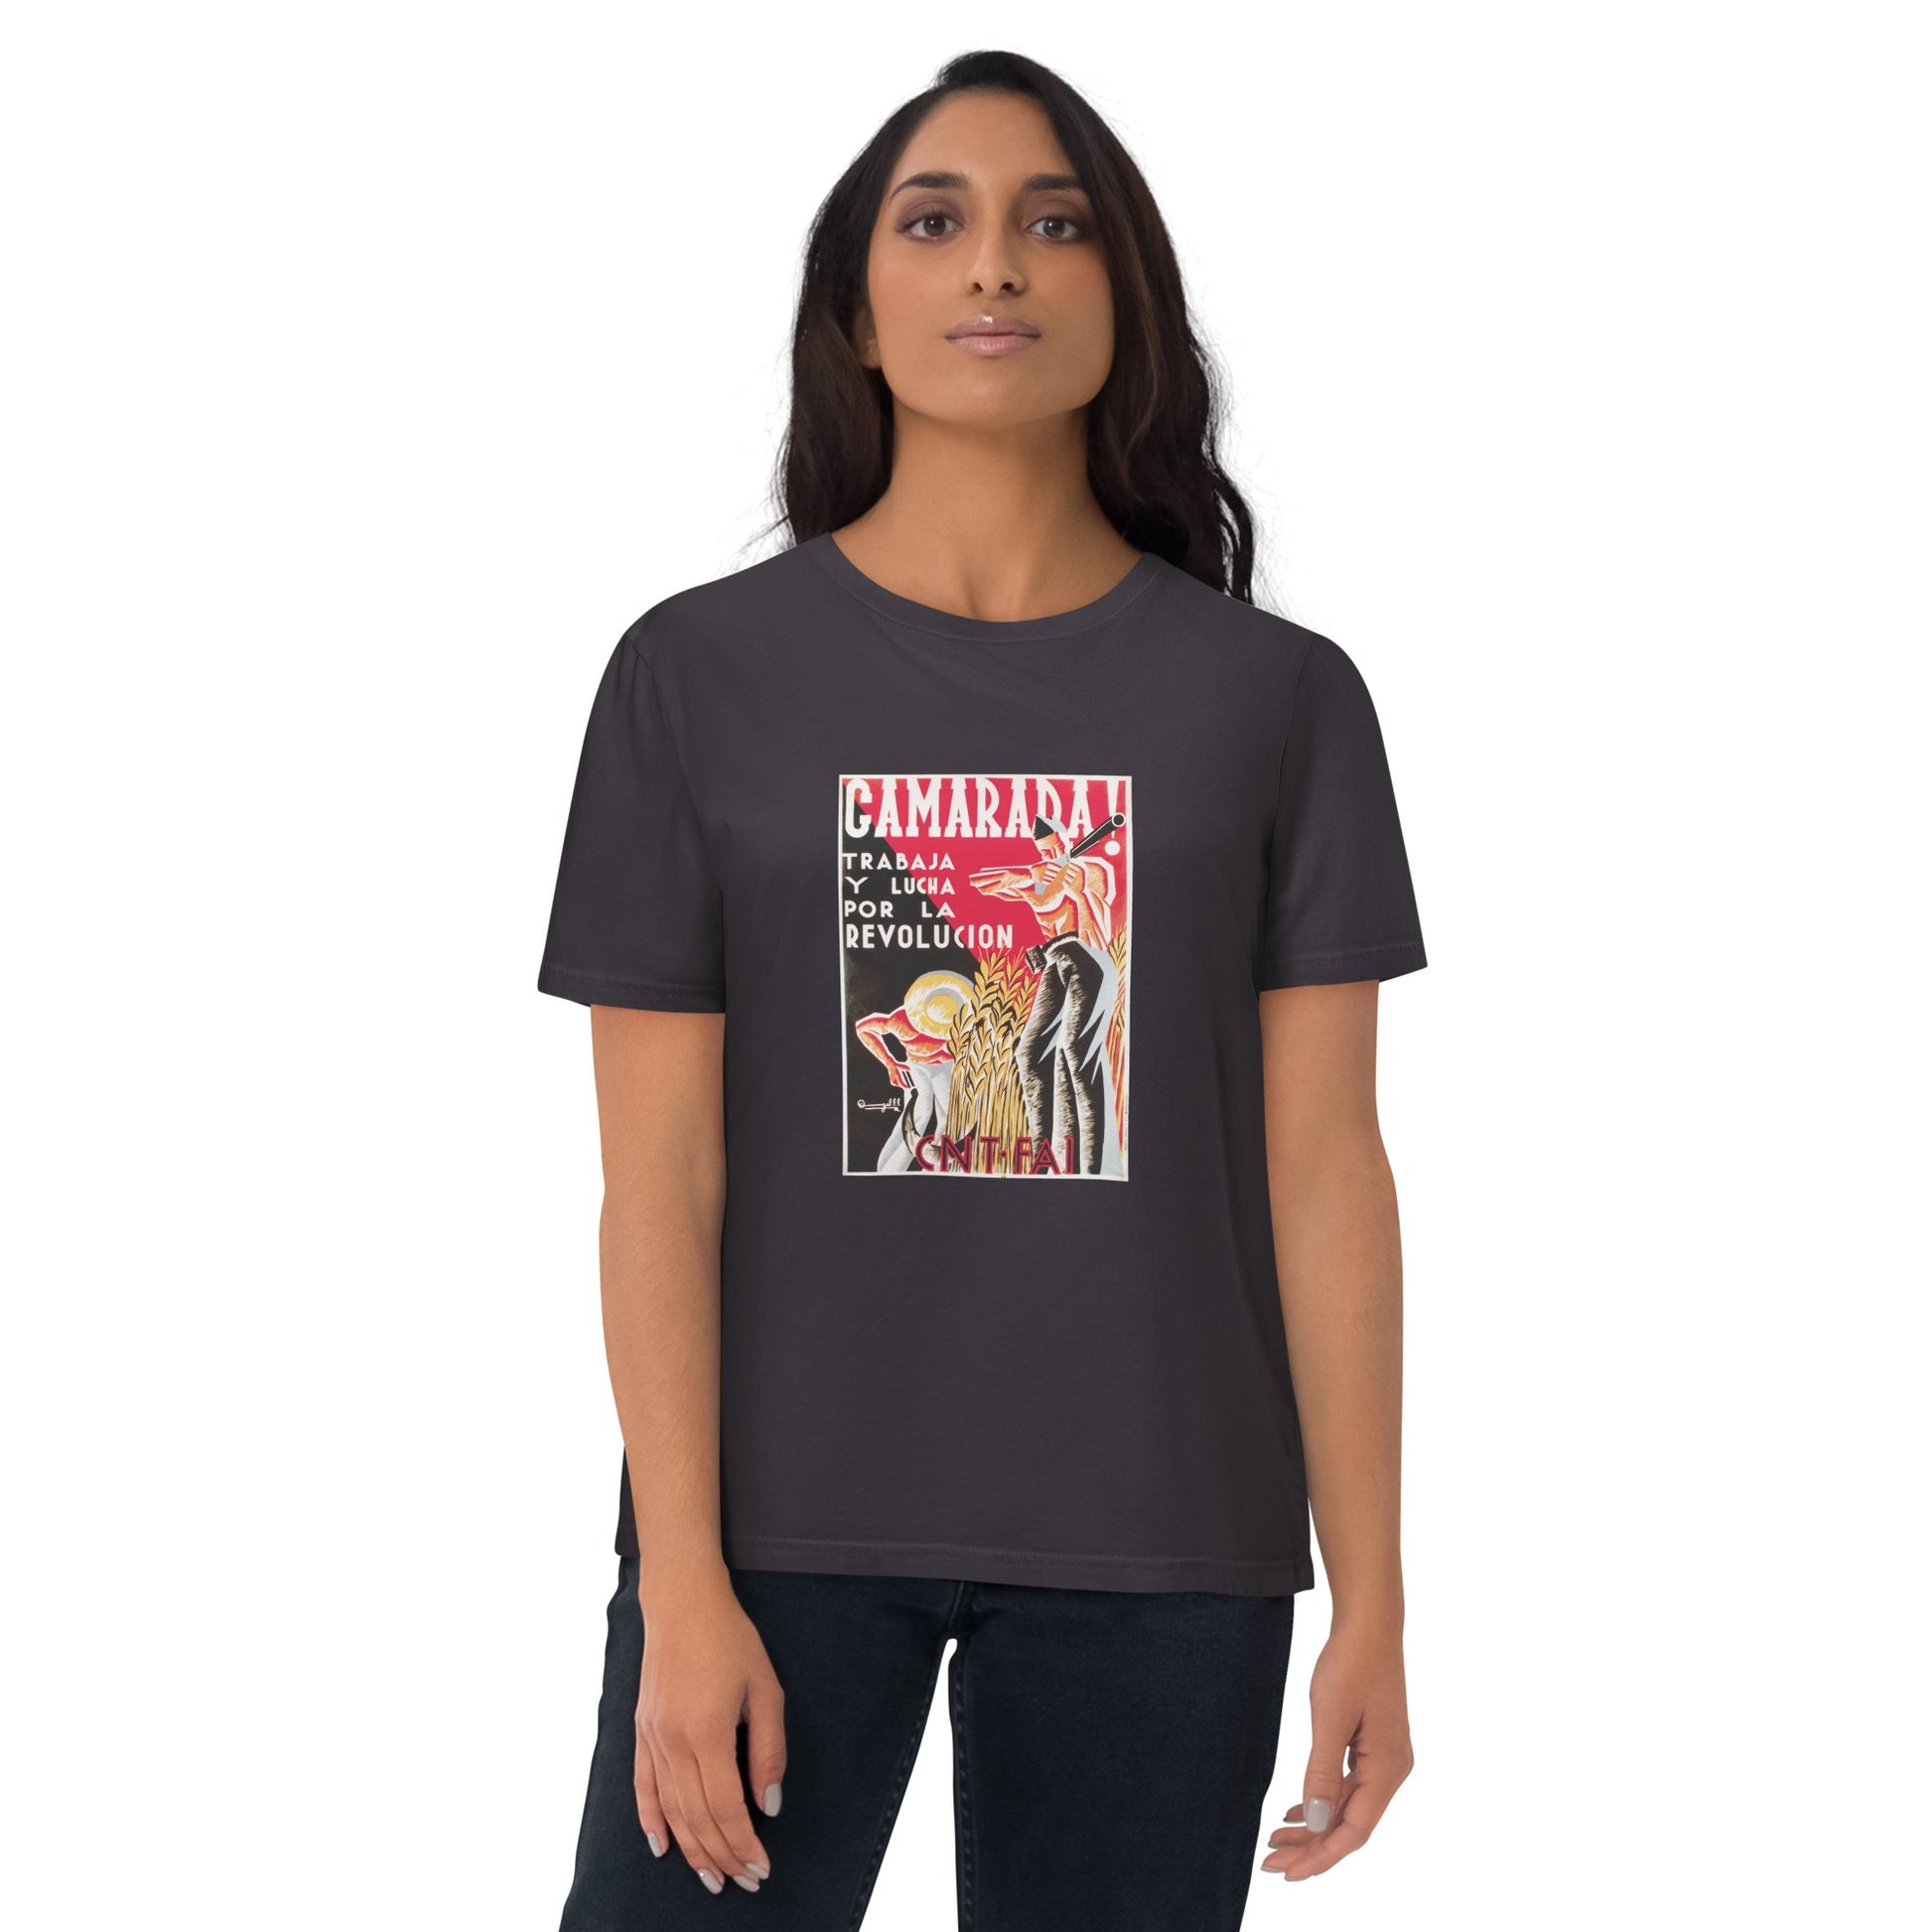 Camarada - Unisex organic cotton t-shirt - Souled Out World